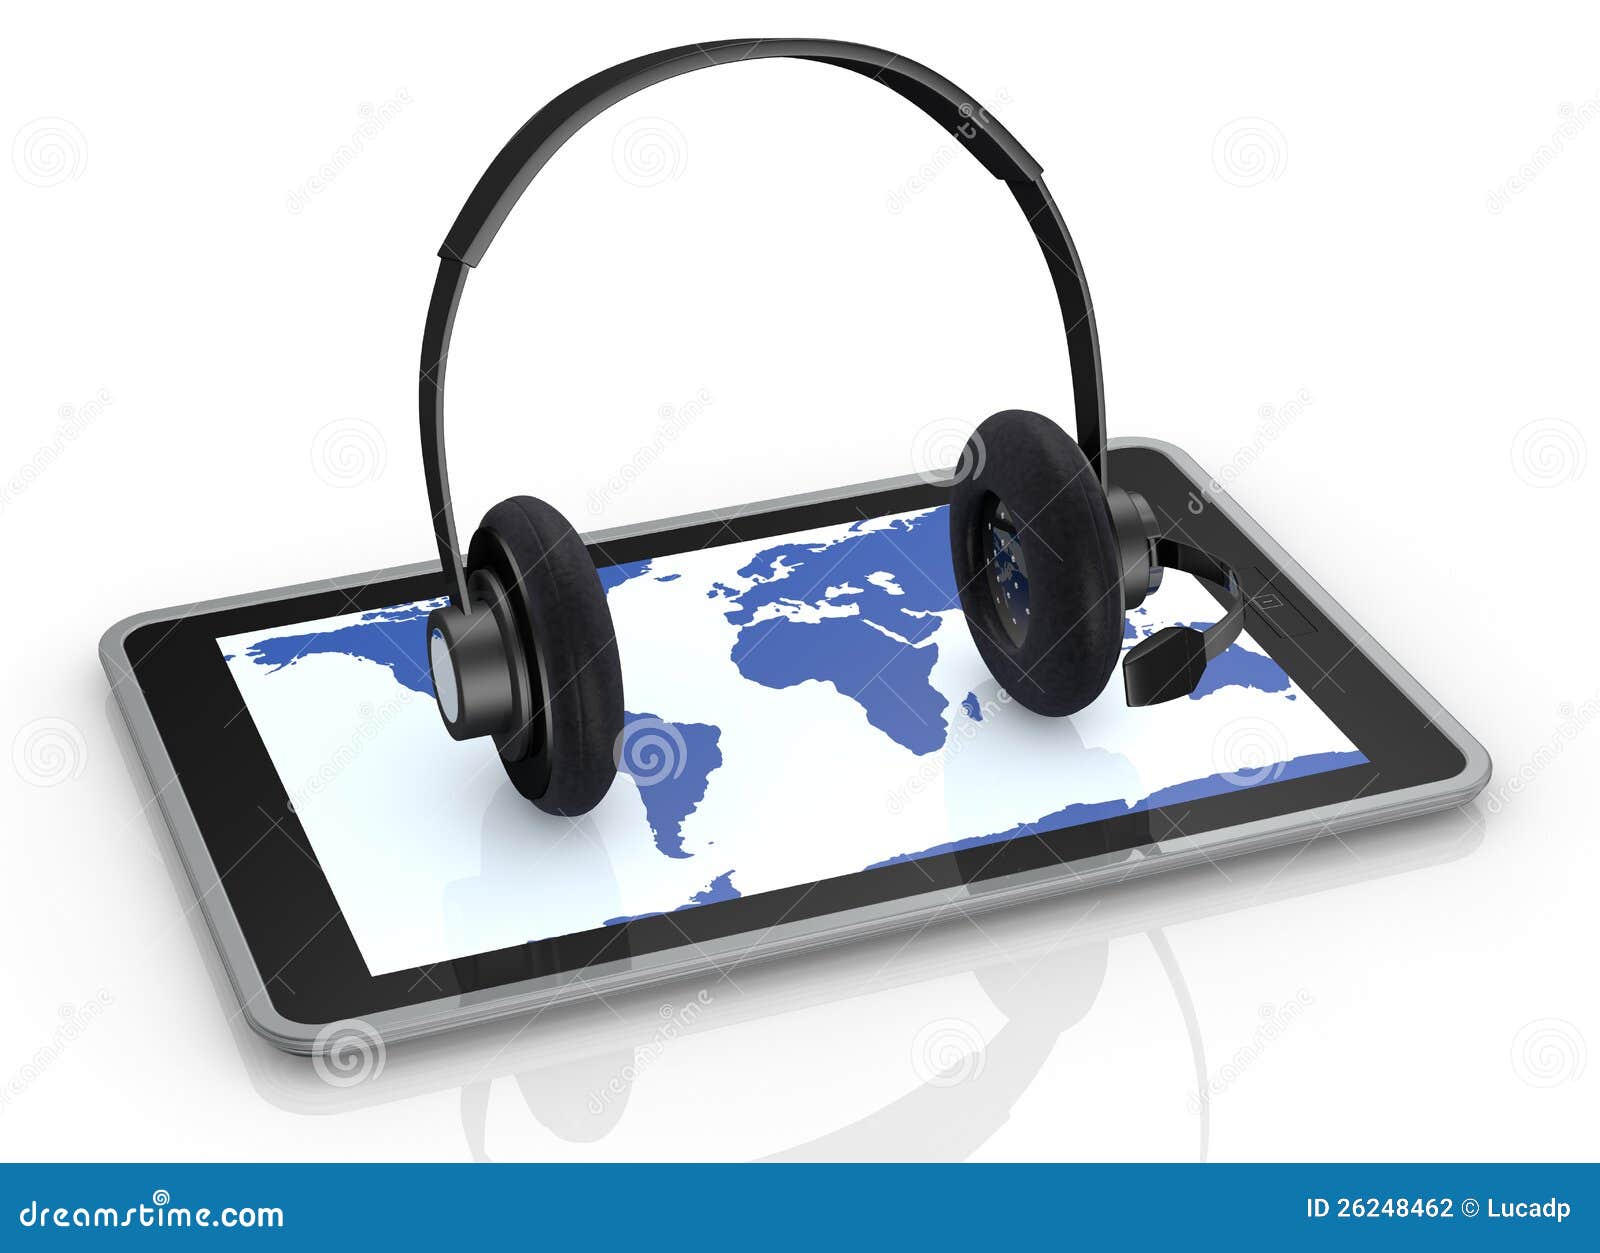 Tablet And Headphones Stock Illustration Illustration Of Desk